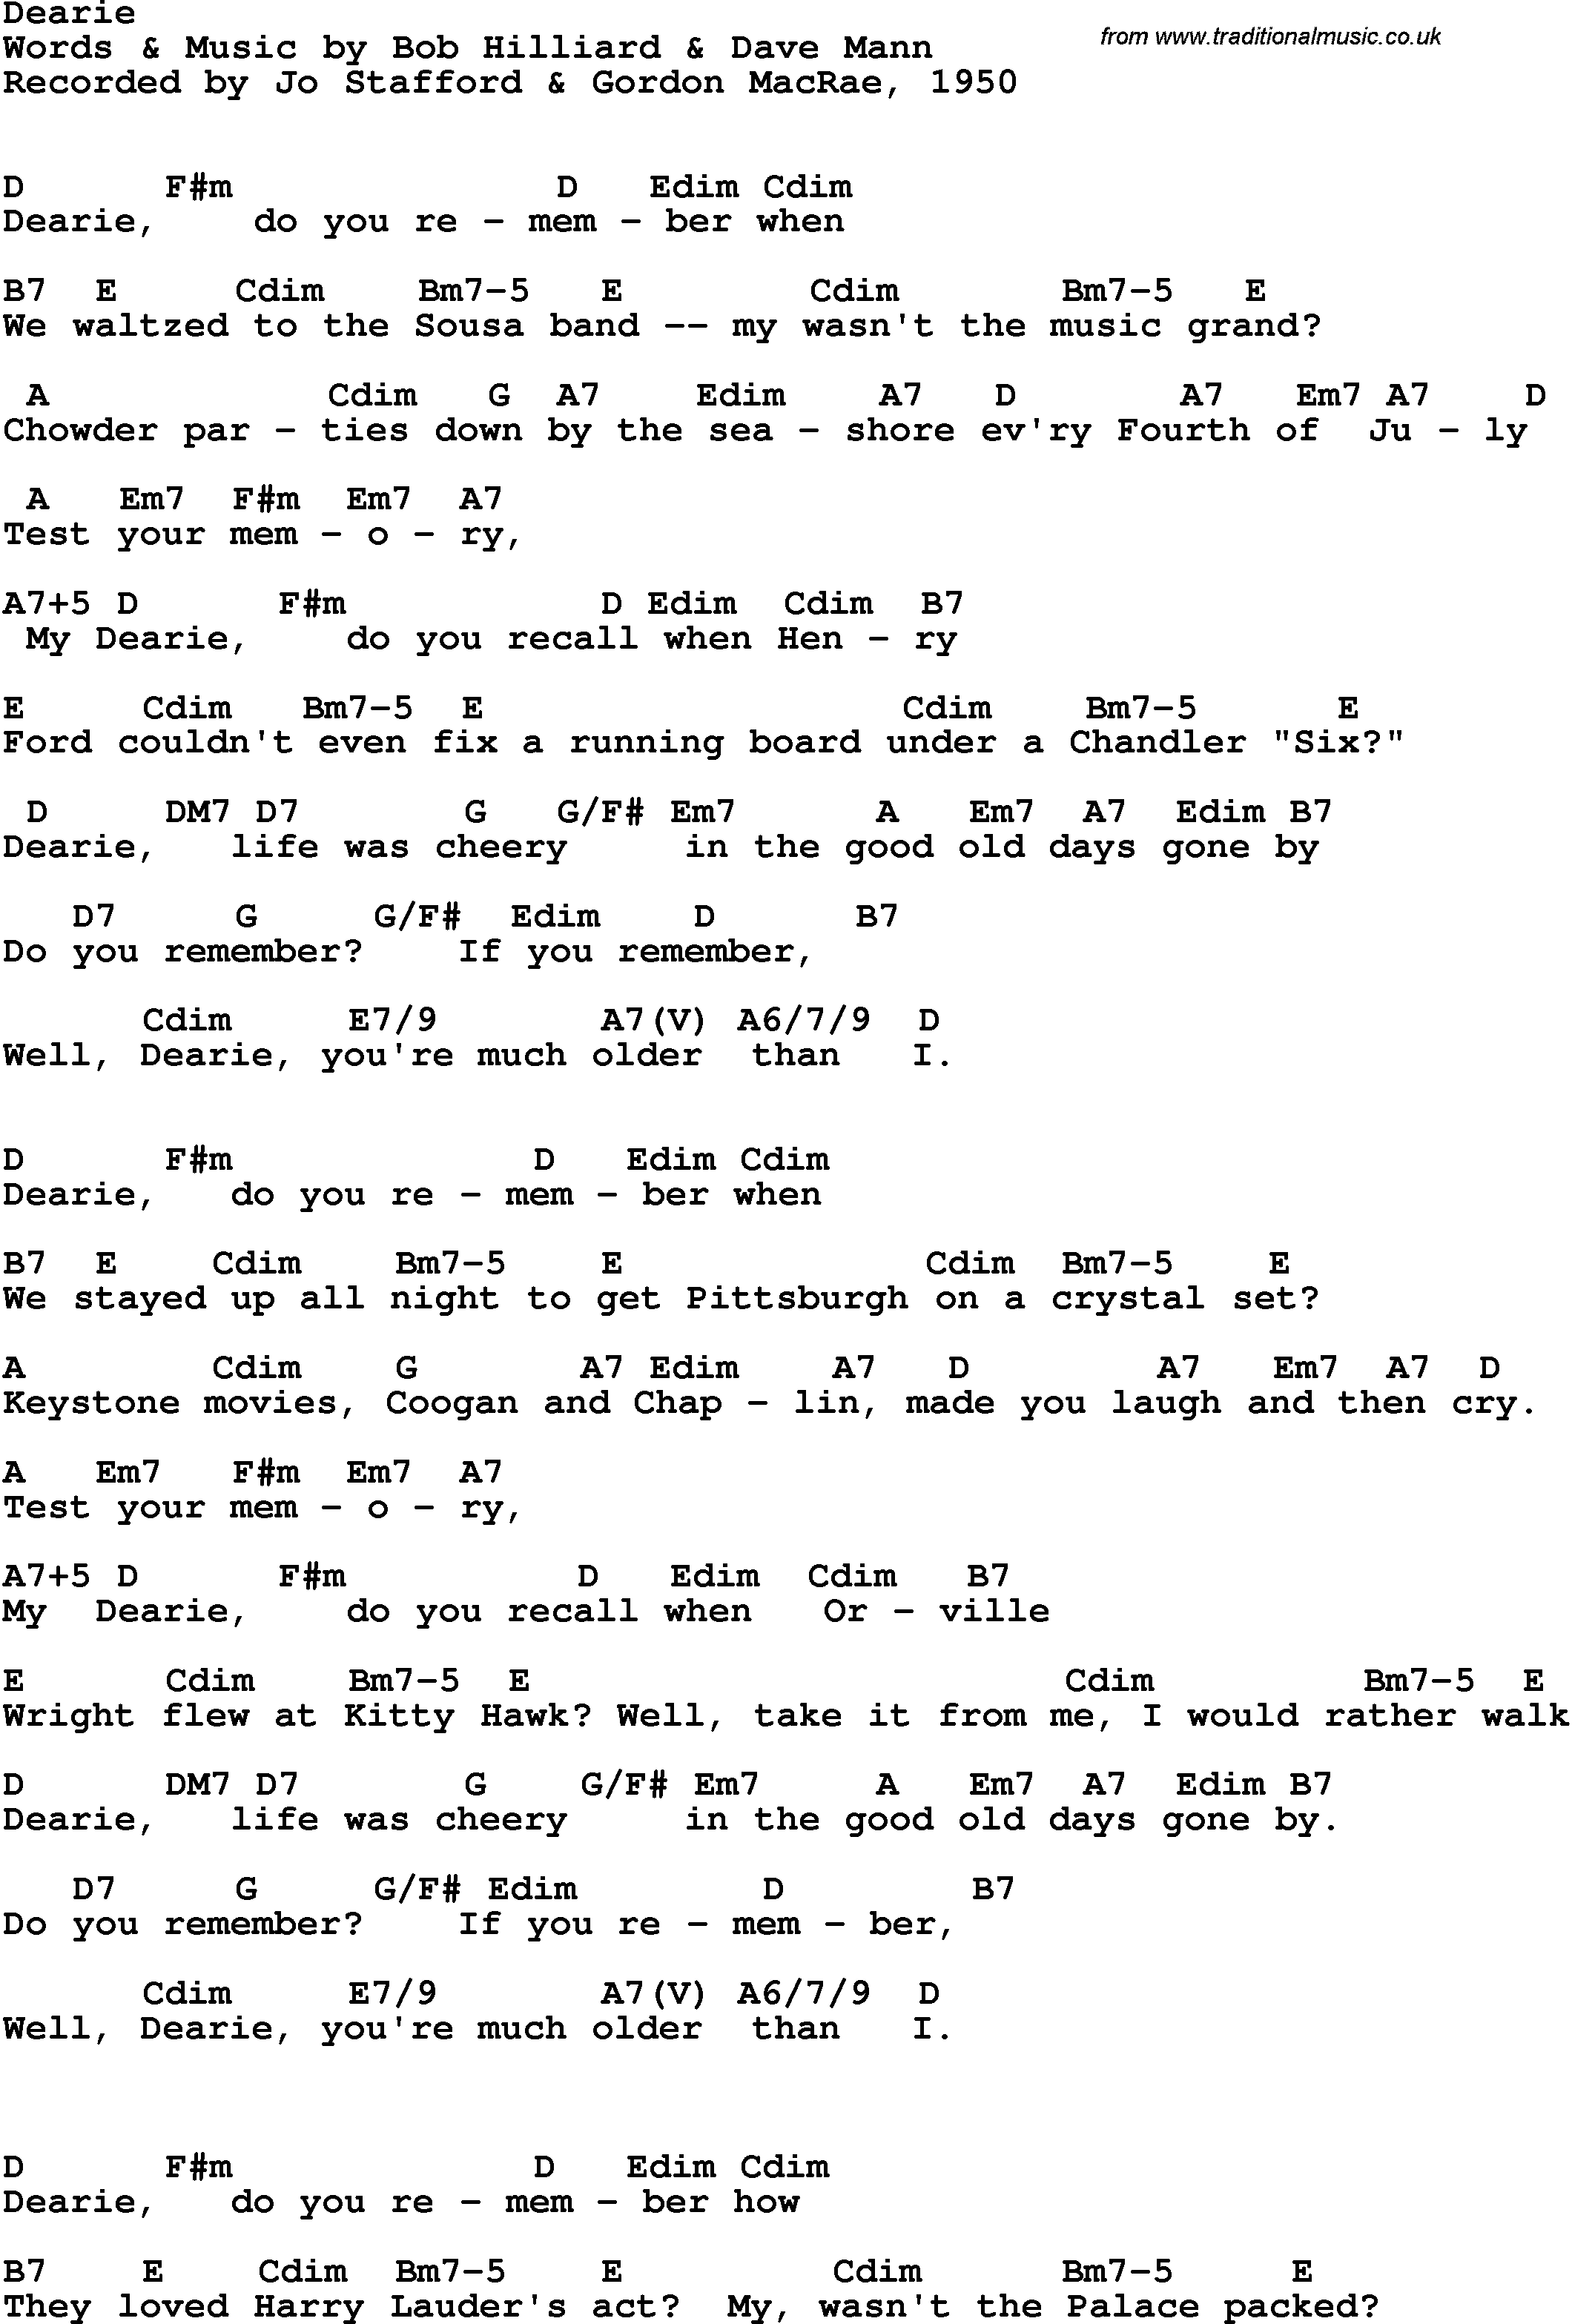 Song Lyrics with guitar chords for Dearie - Jo Stafford & Gordon Macrae, 1950